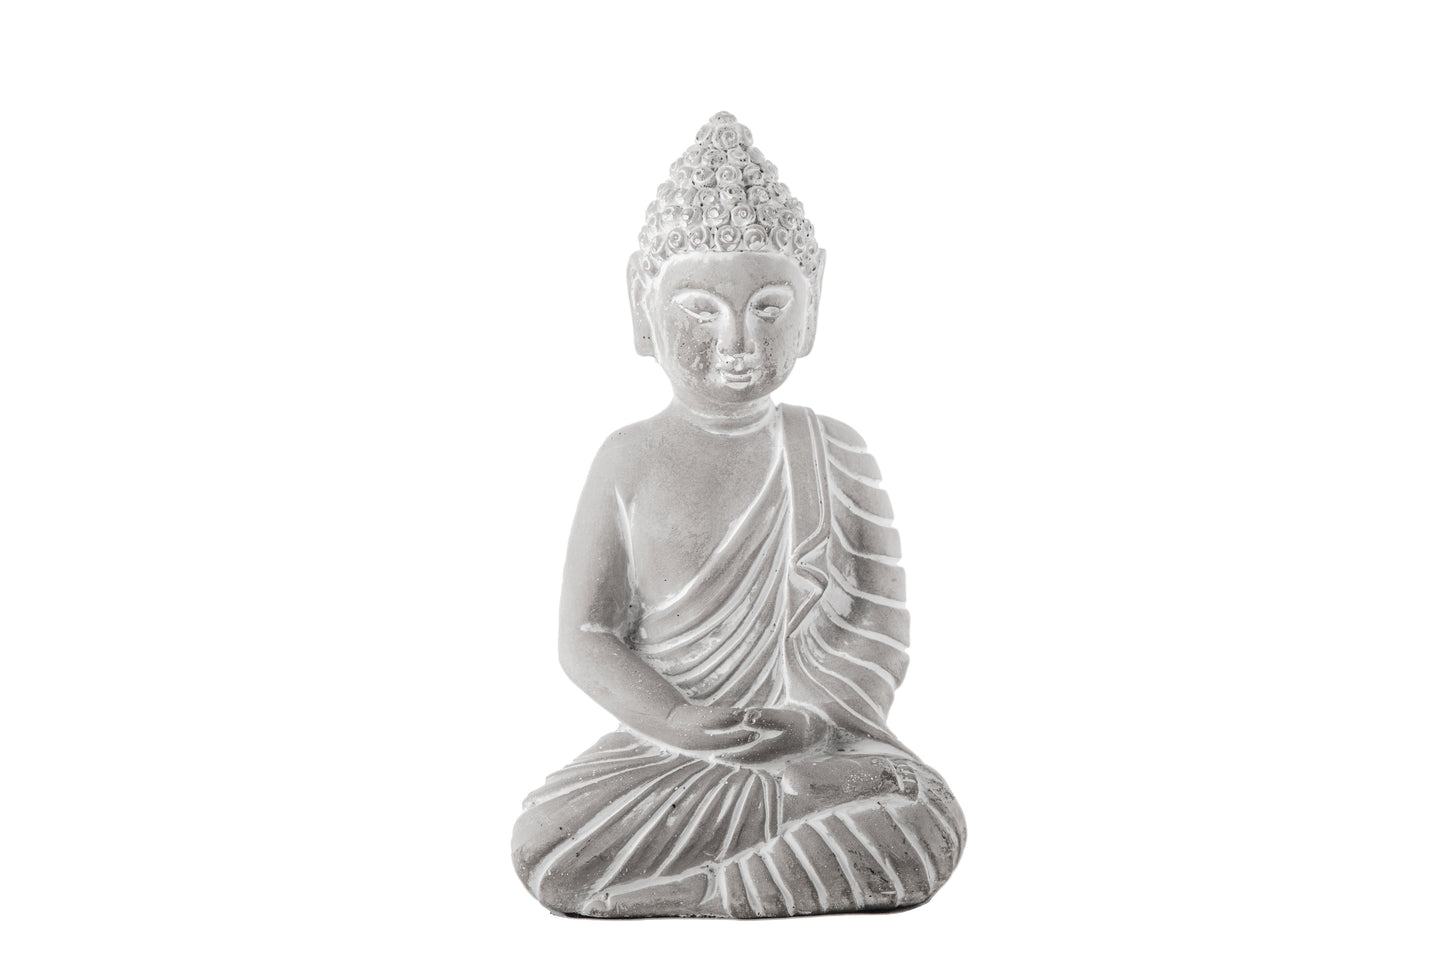 9" Cement Meditating Buddha Figurine in Dhyana Mudra Position